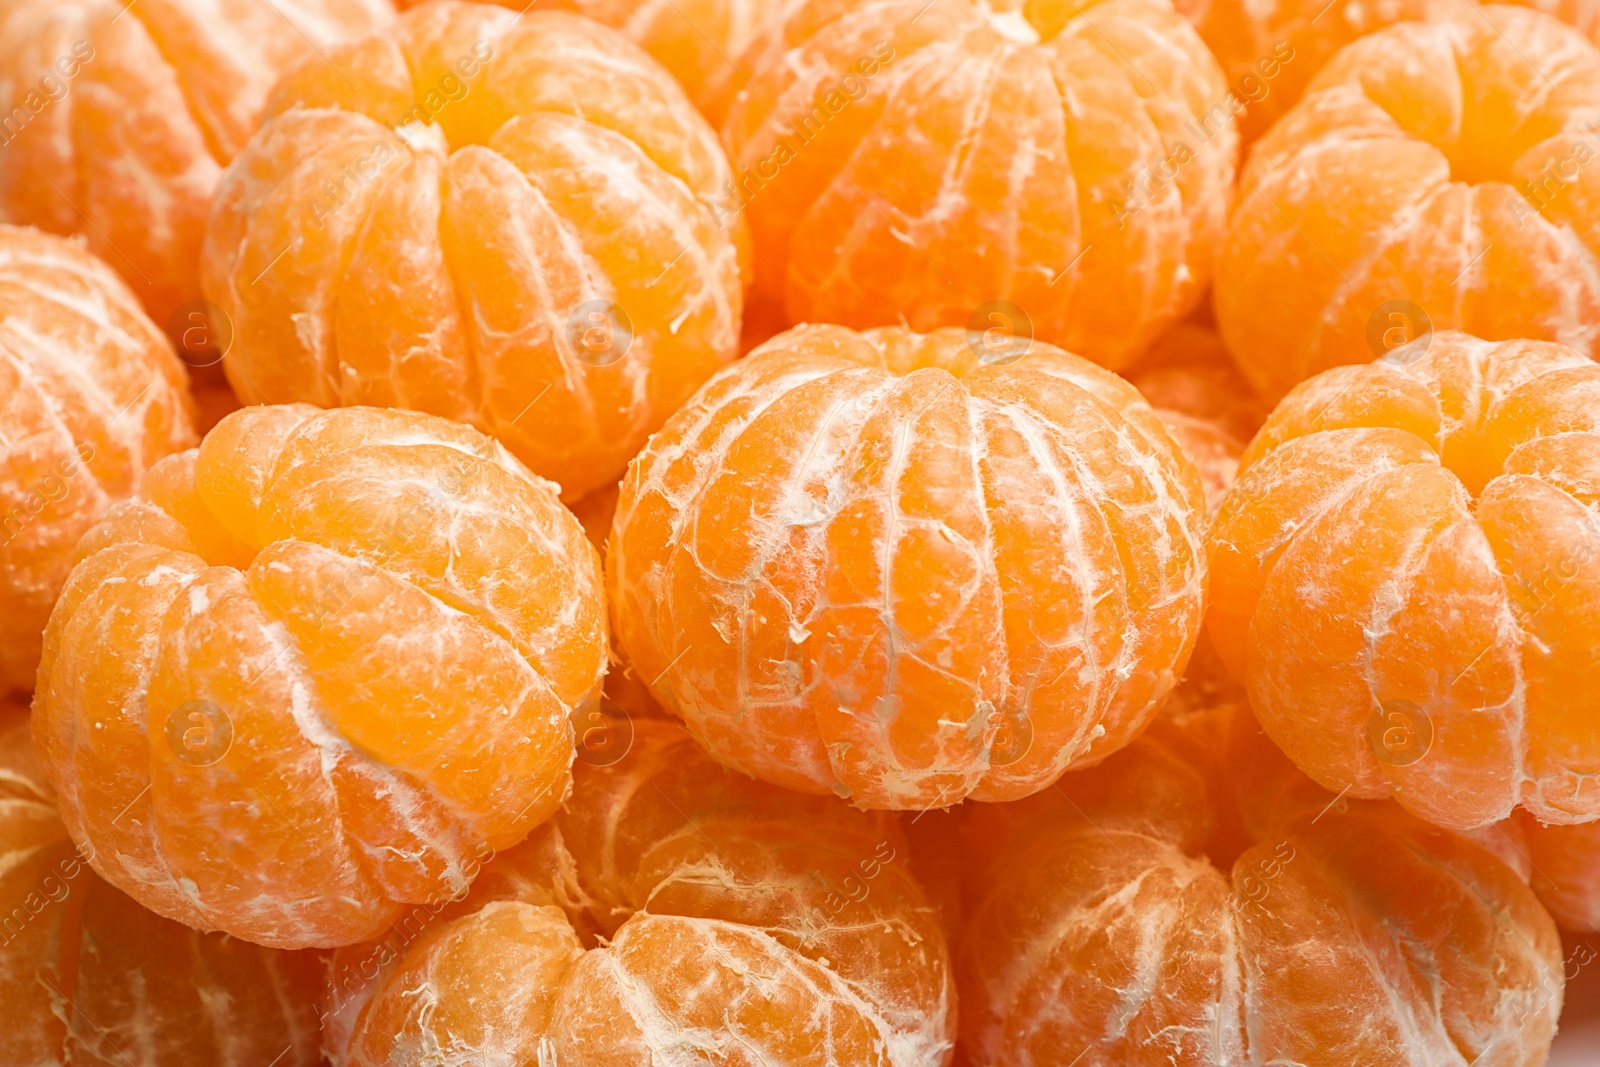 Photo of Peeled fresh ripe tangerines as background, closeup